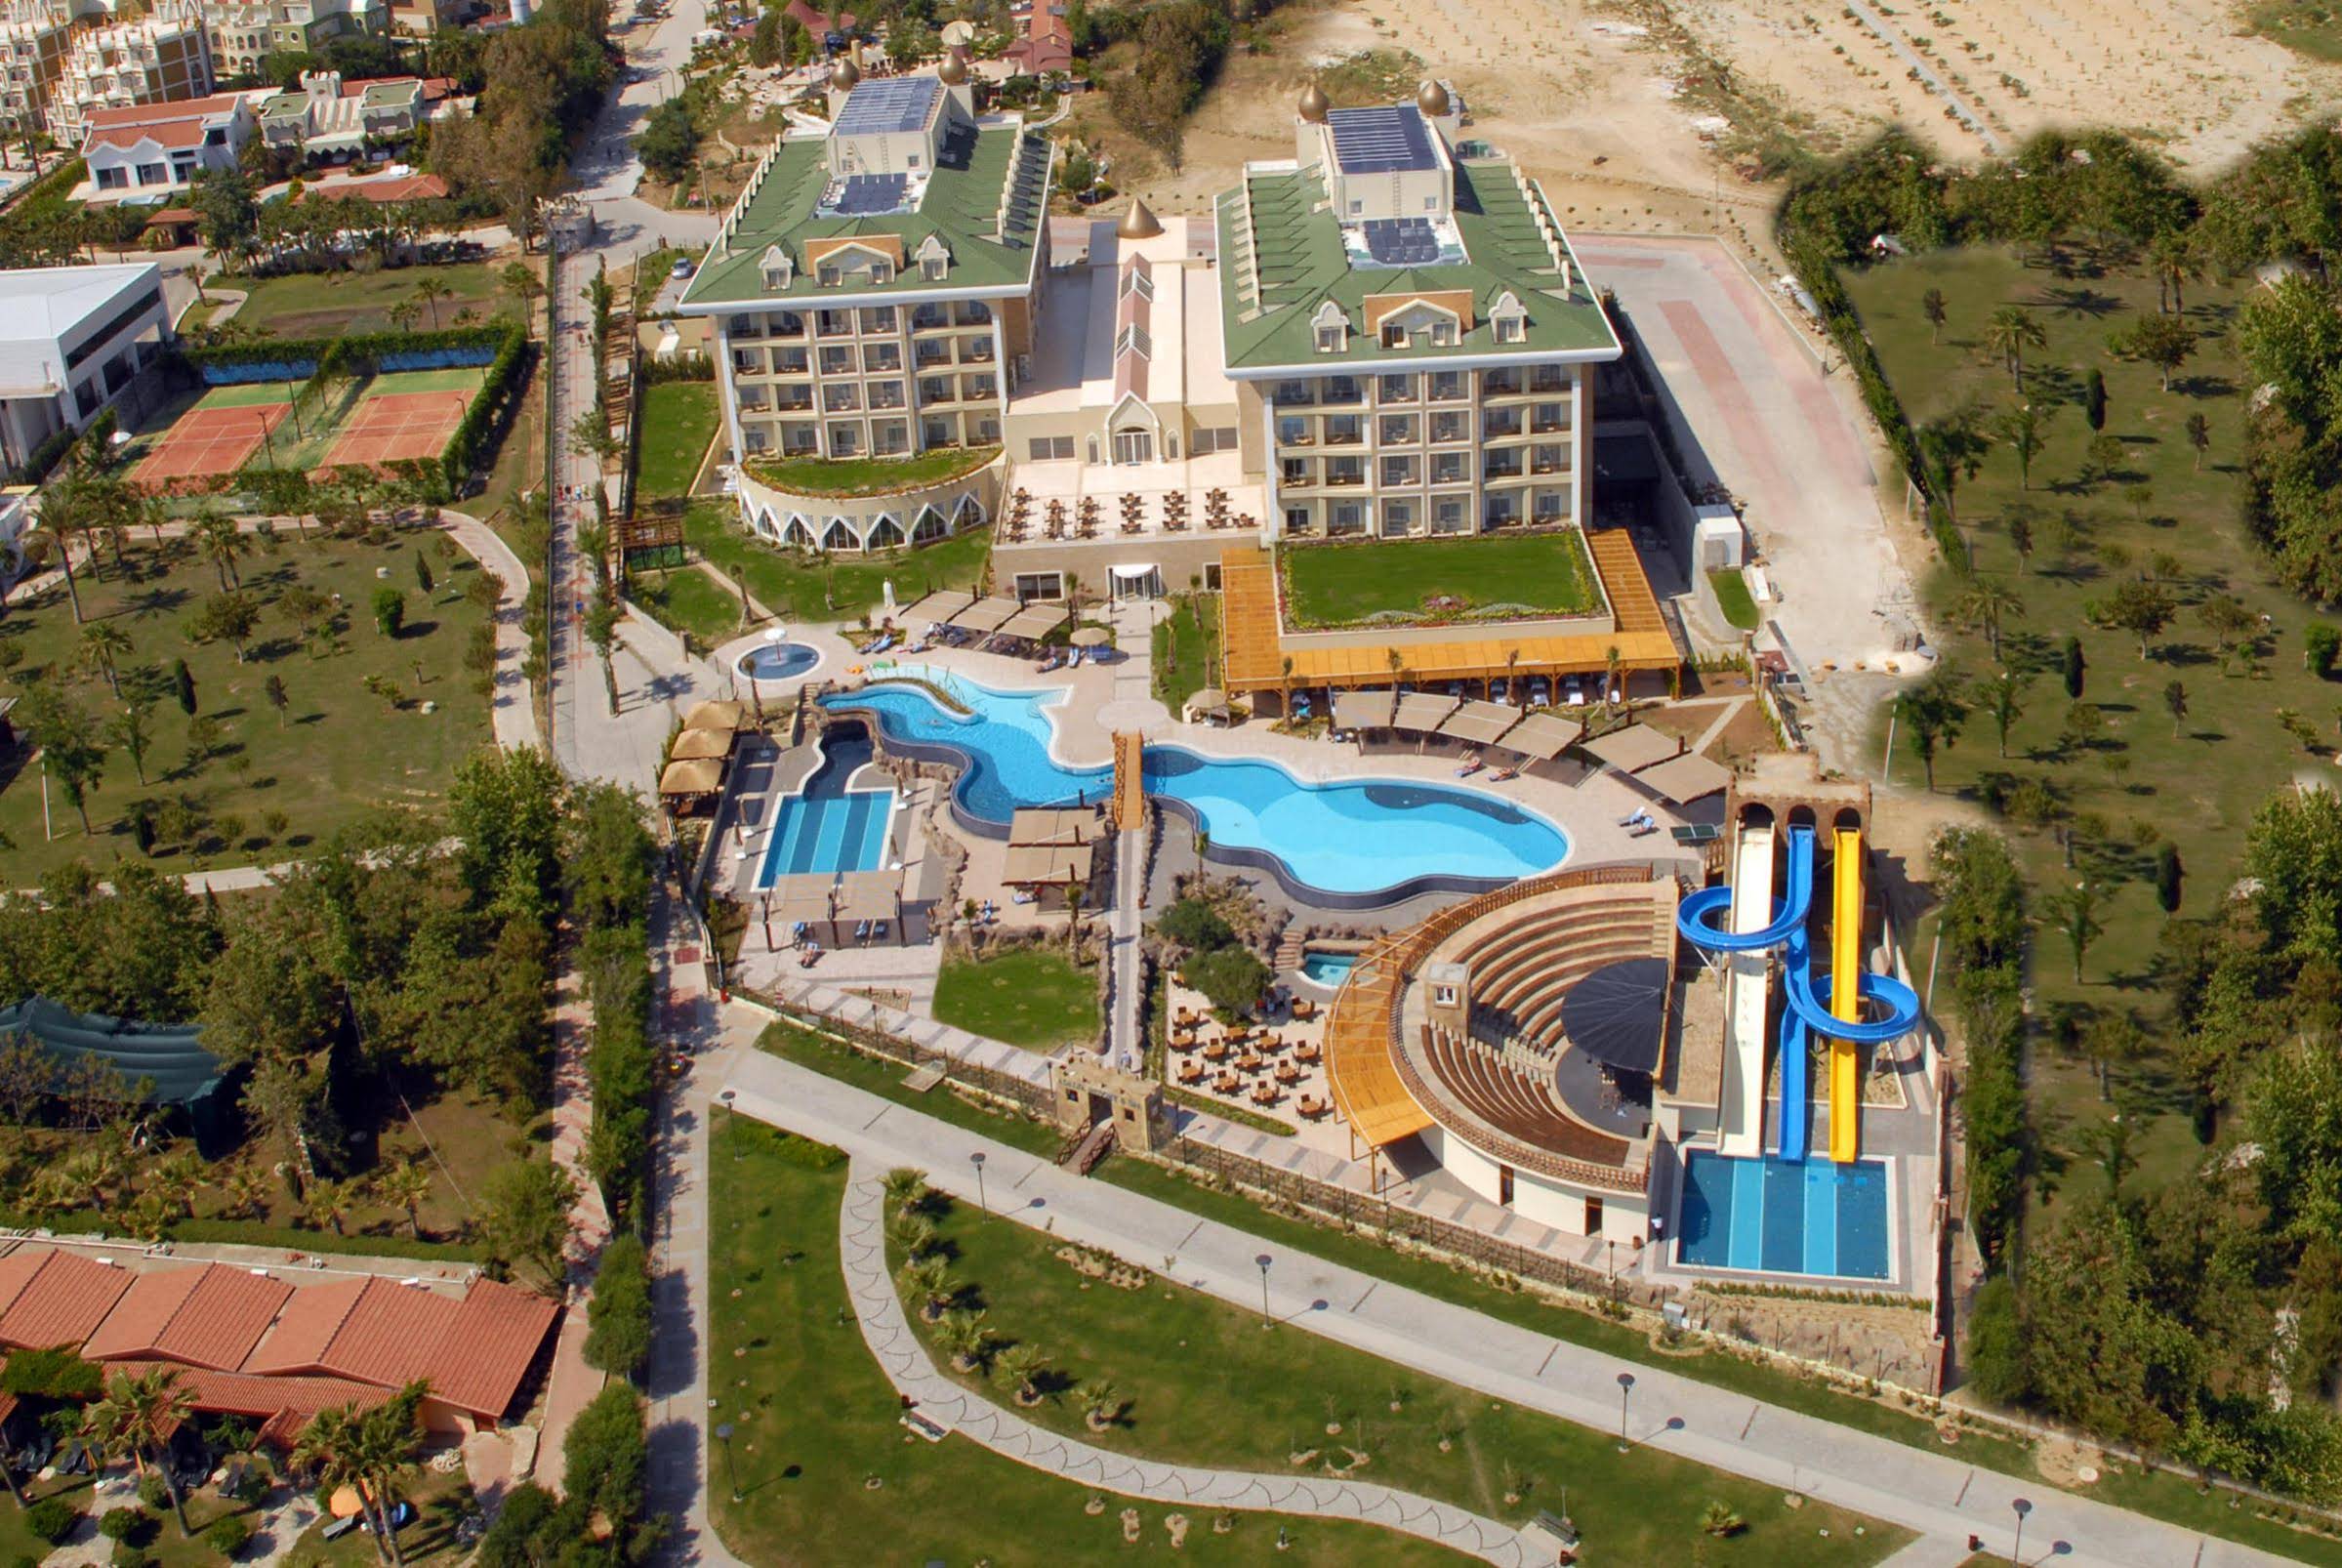 Adalya Resort & Spa Hotel - All Inclusive